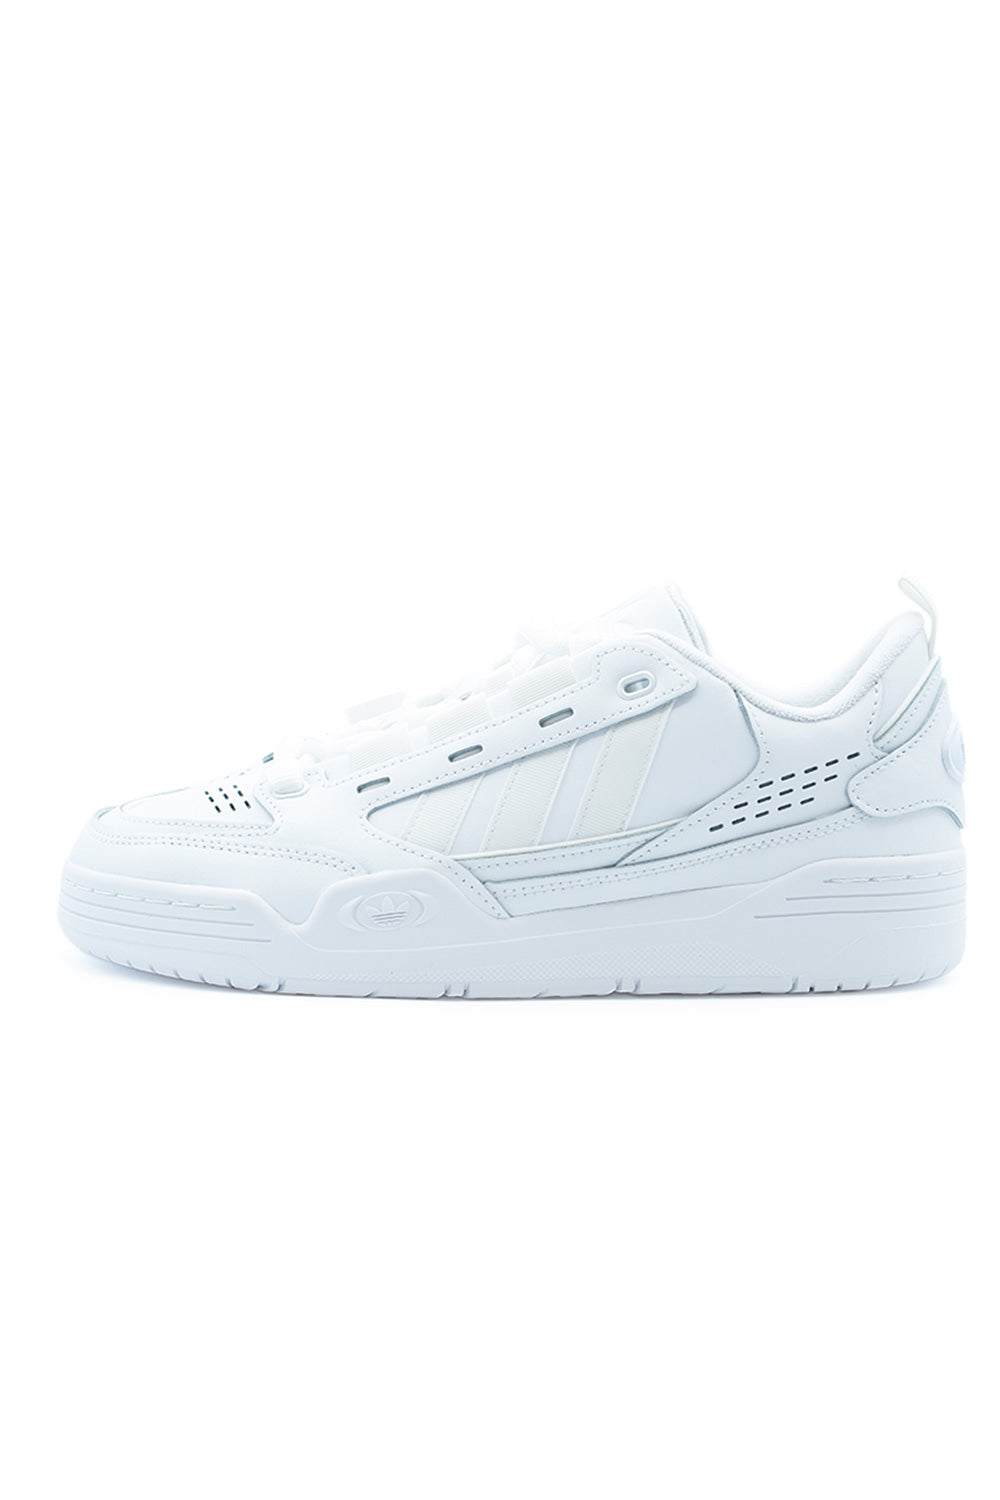 Adidas Adi2000 Shoe Footwear White / Footwear White / Footwear White - BONKERS